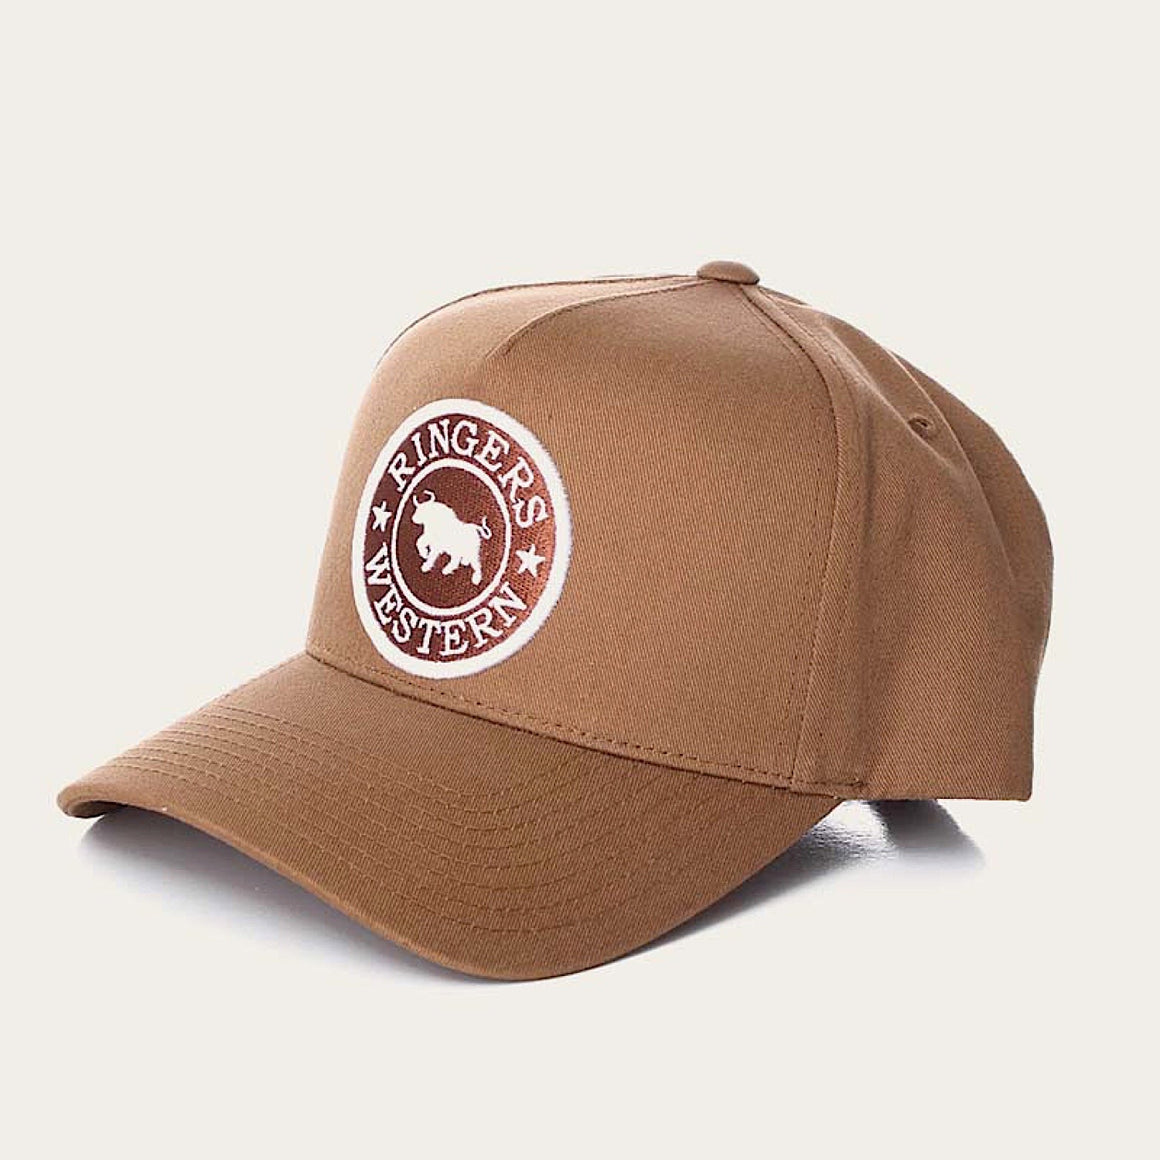 Ringers Western Grover Baseball Cap - Clay